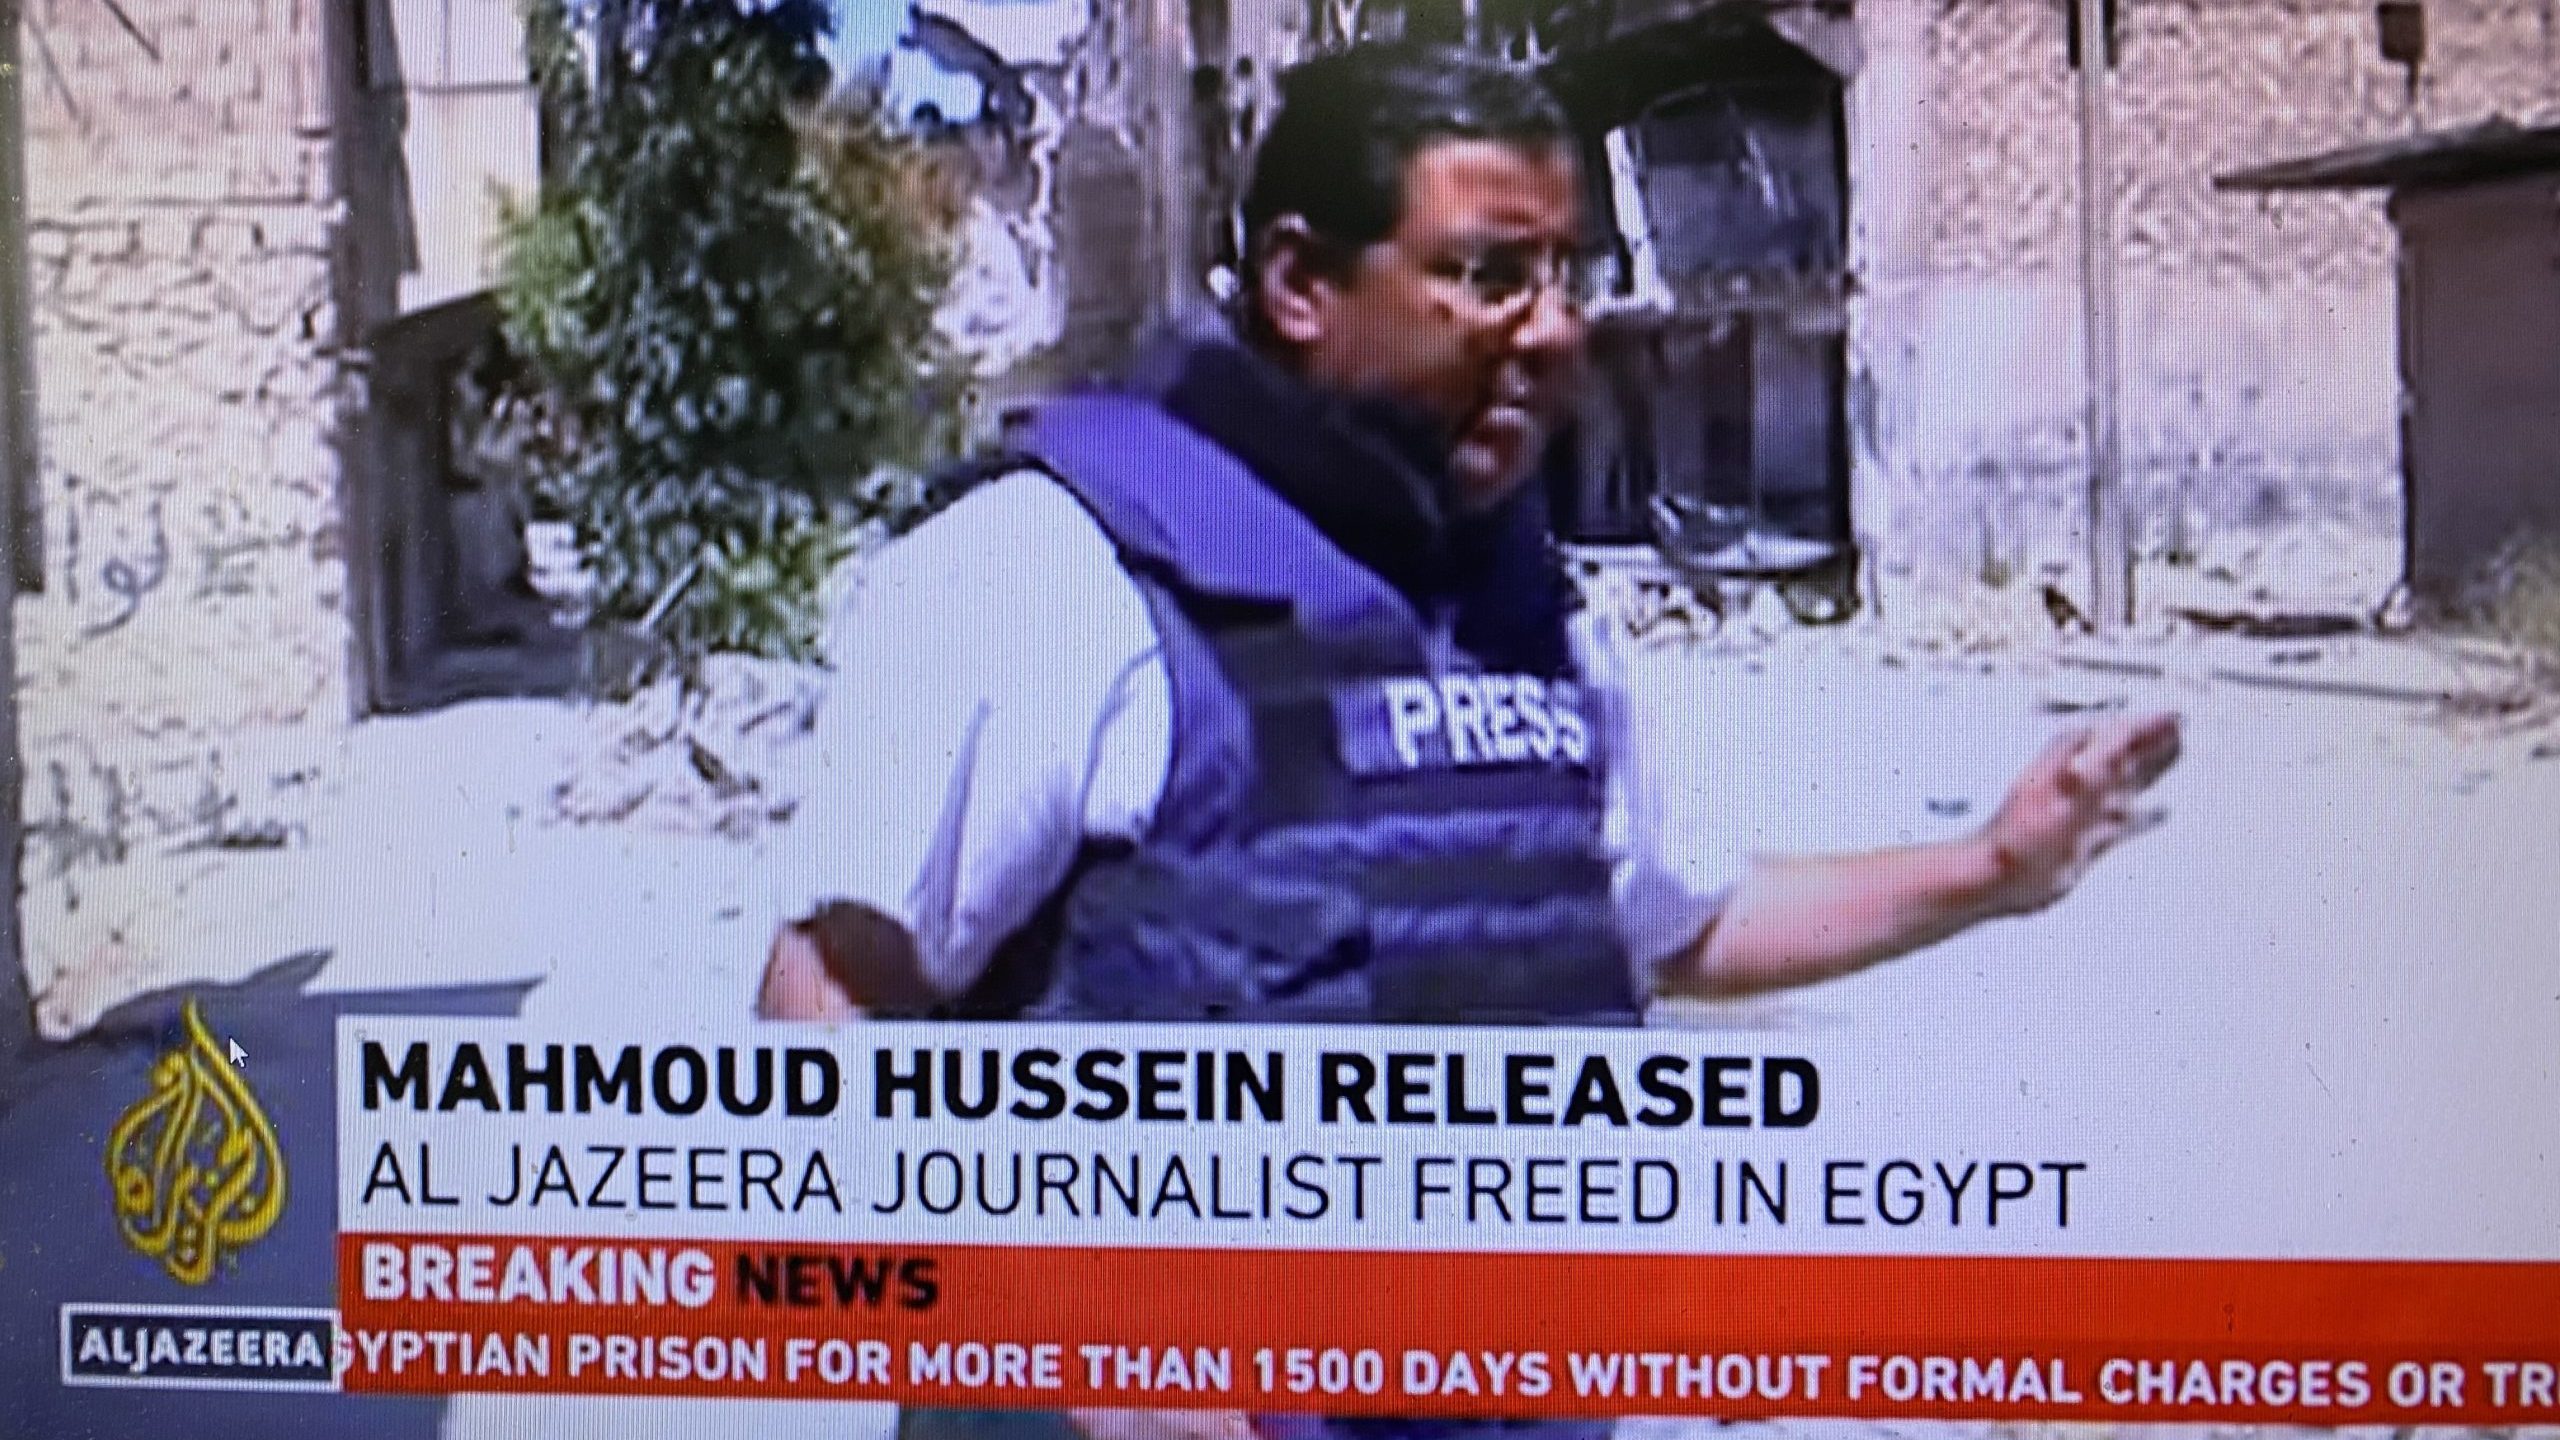 Egypt Releases Al Jazeera Journalist Held for 4 Years